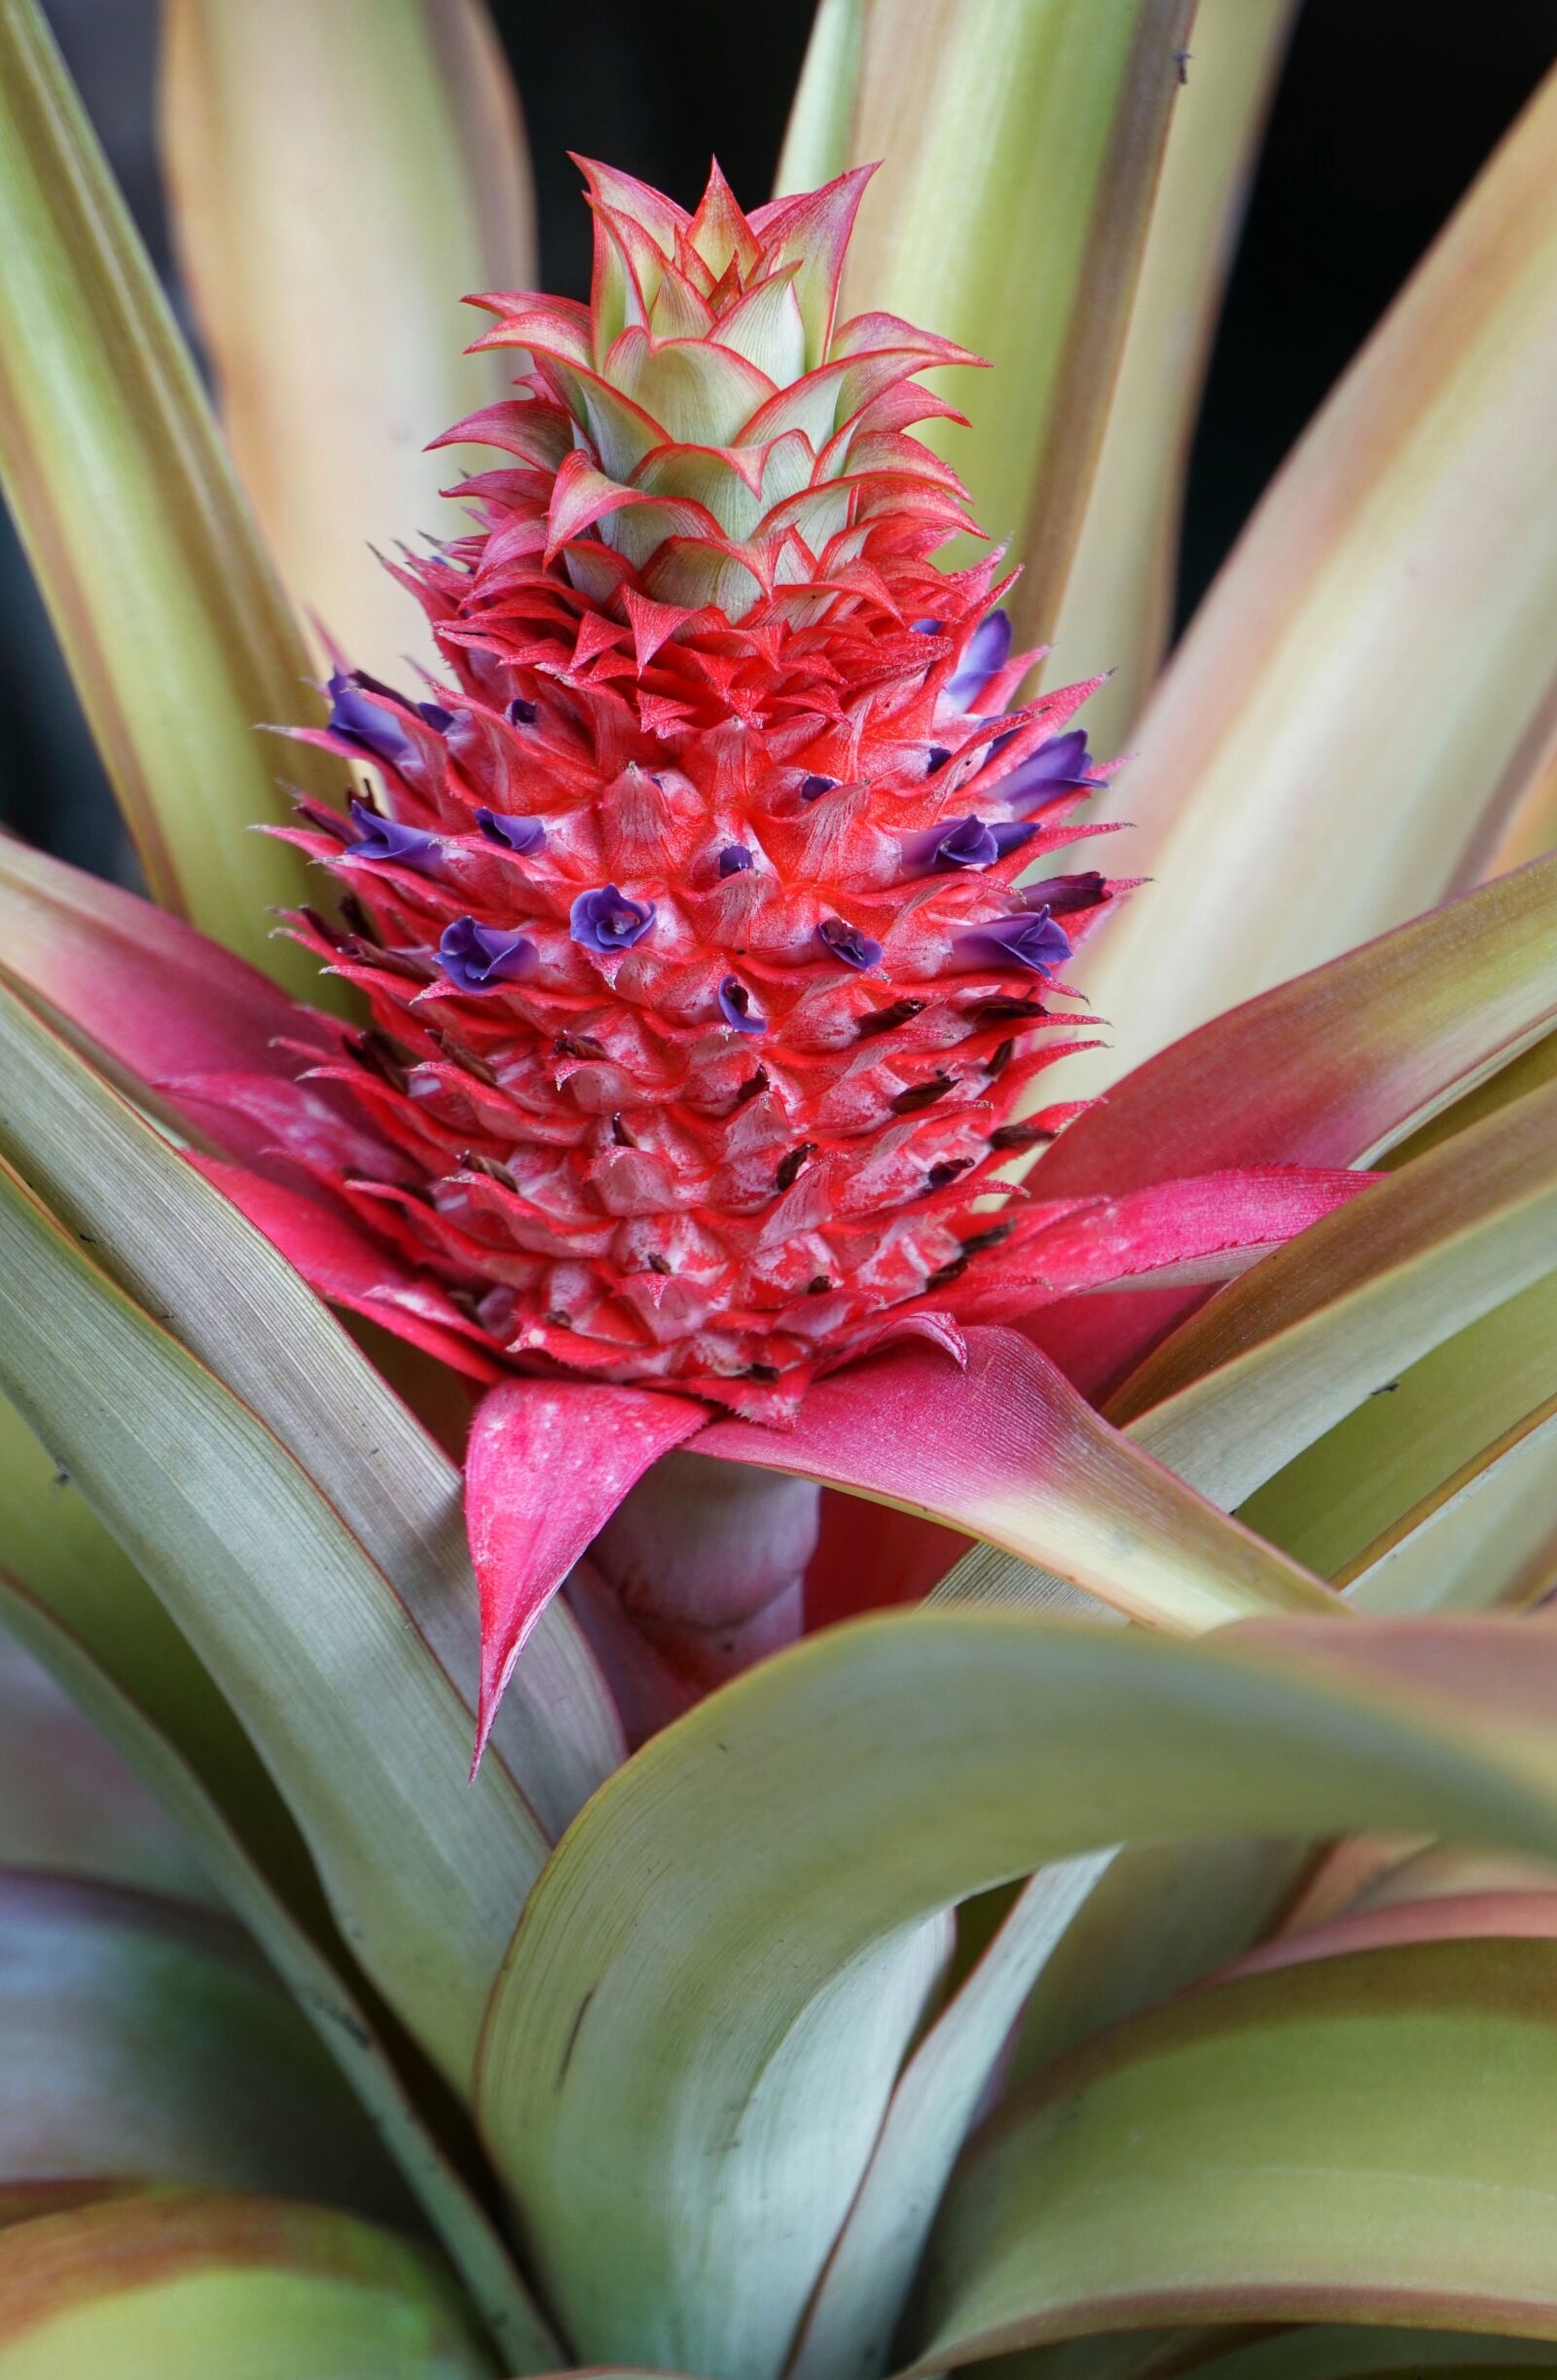 Sony a6300 sample photo. Nanas, pineapple, tropical photography